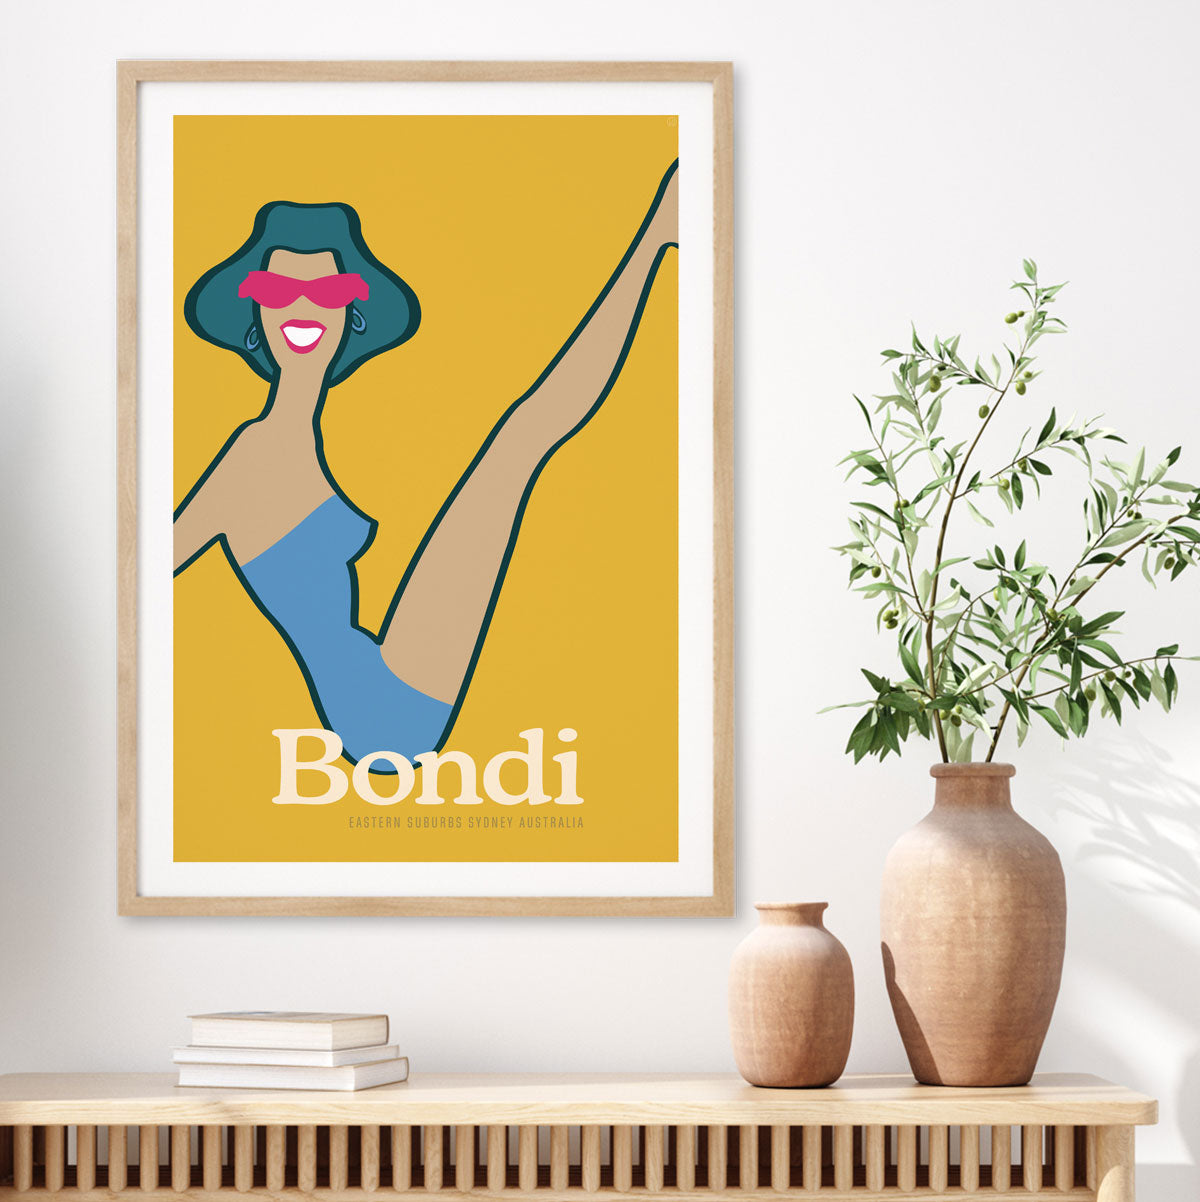 Bondi vintage retro poster print from Places We Luv